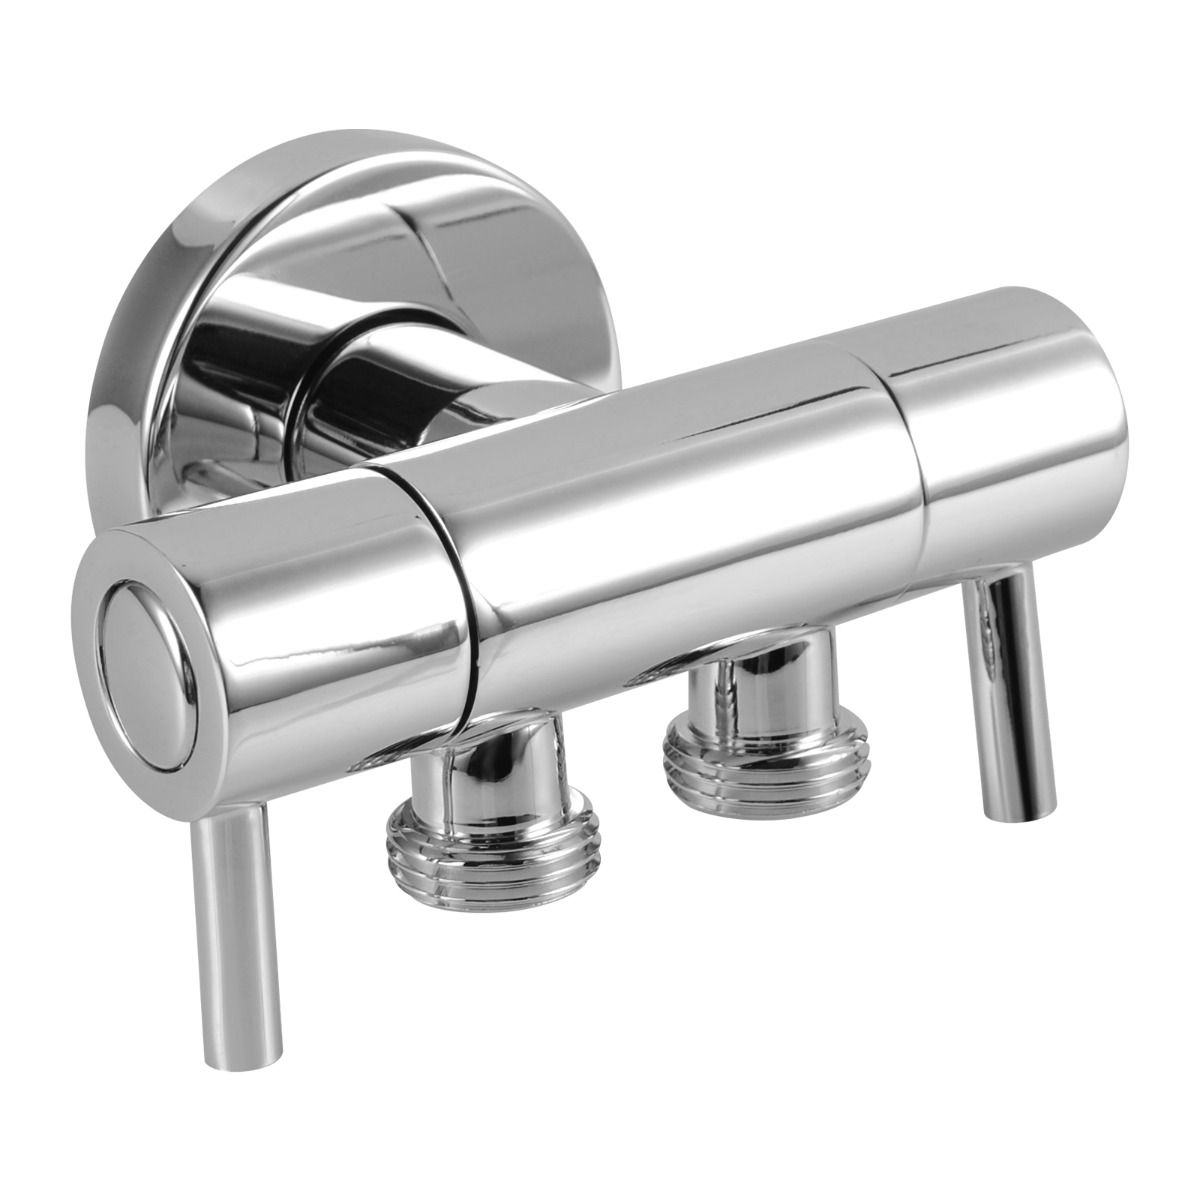 Bathroom Solid Brass Chrome Toilet Bidet Spray 1 Inlet 2 Outlet Diverter Only